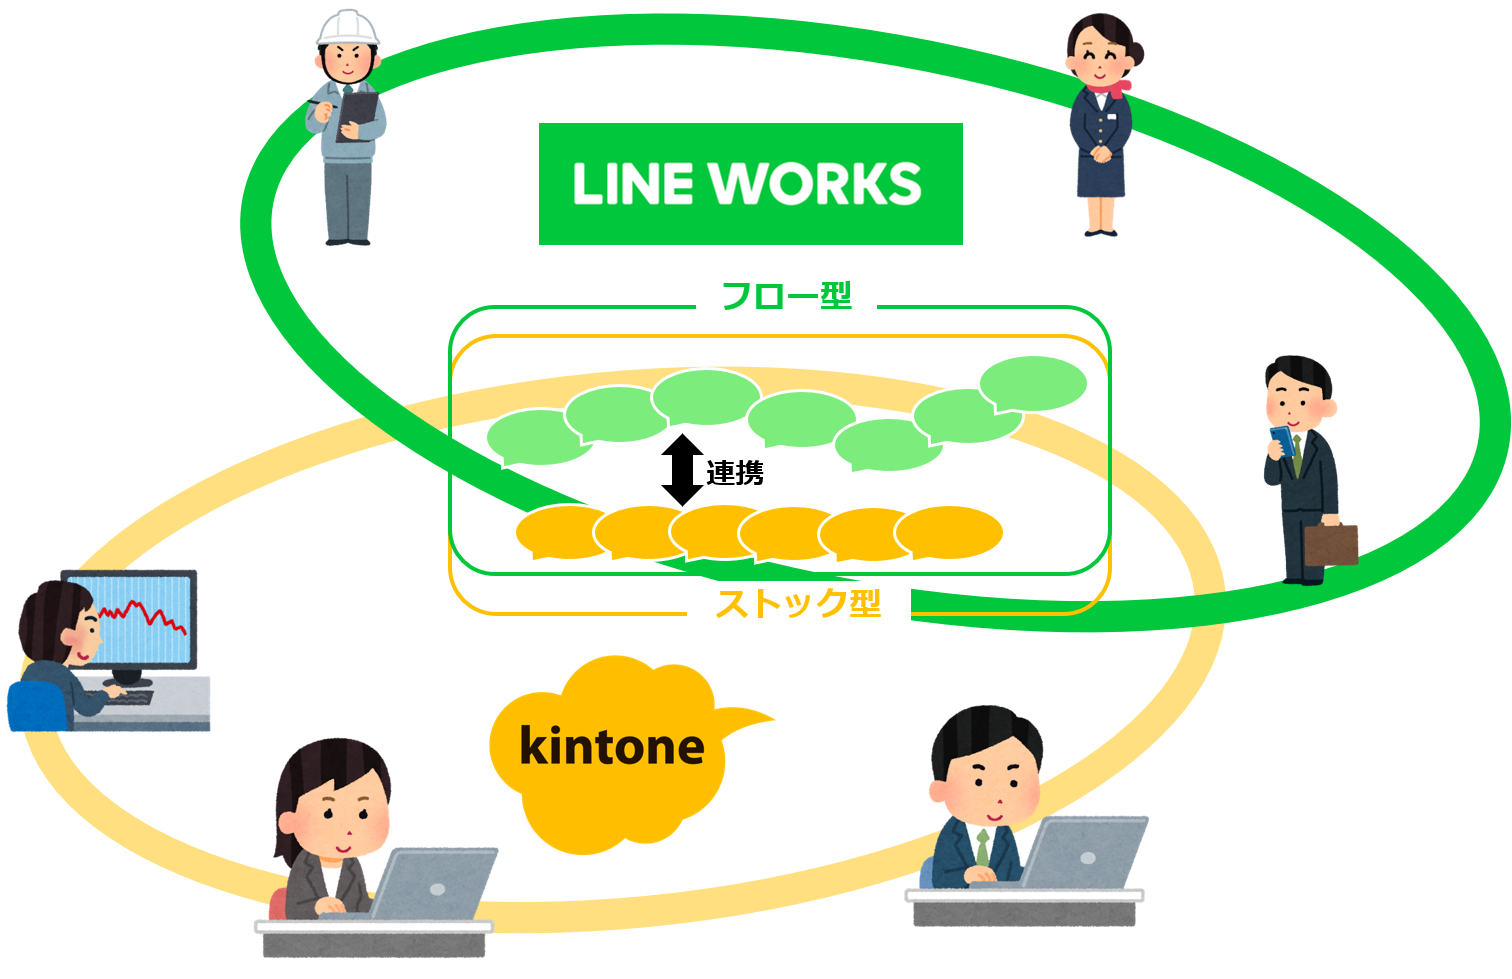 kintone と LINE WORKS が連携されているイメージ